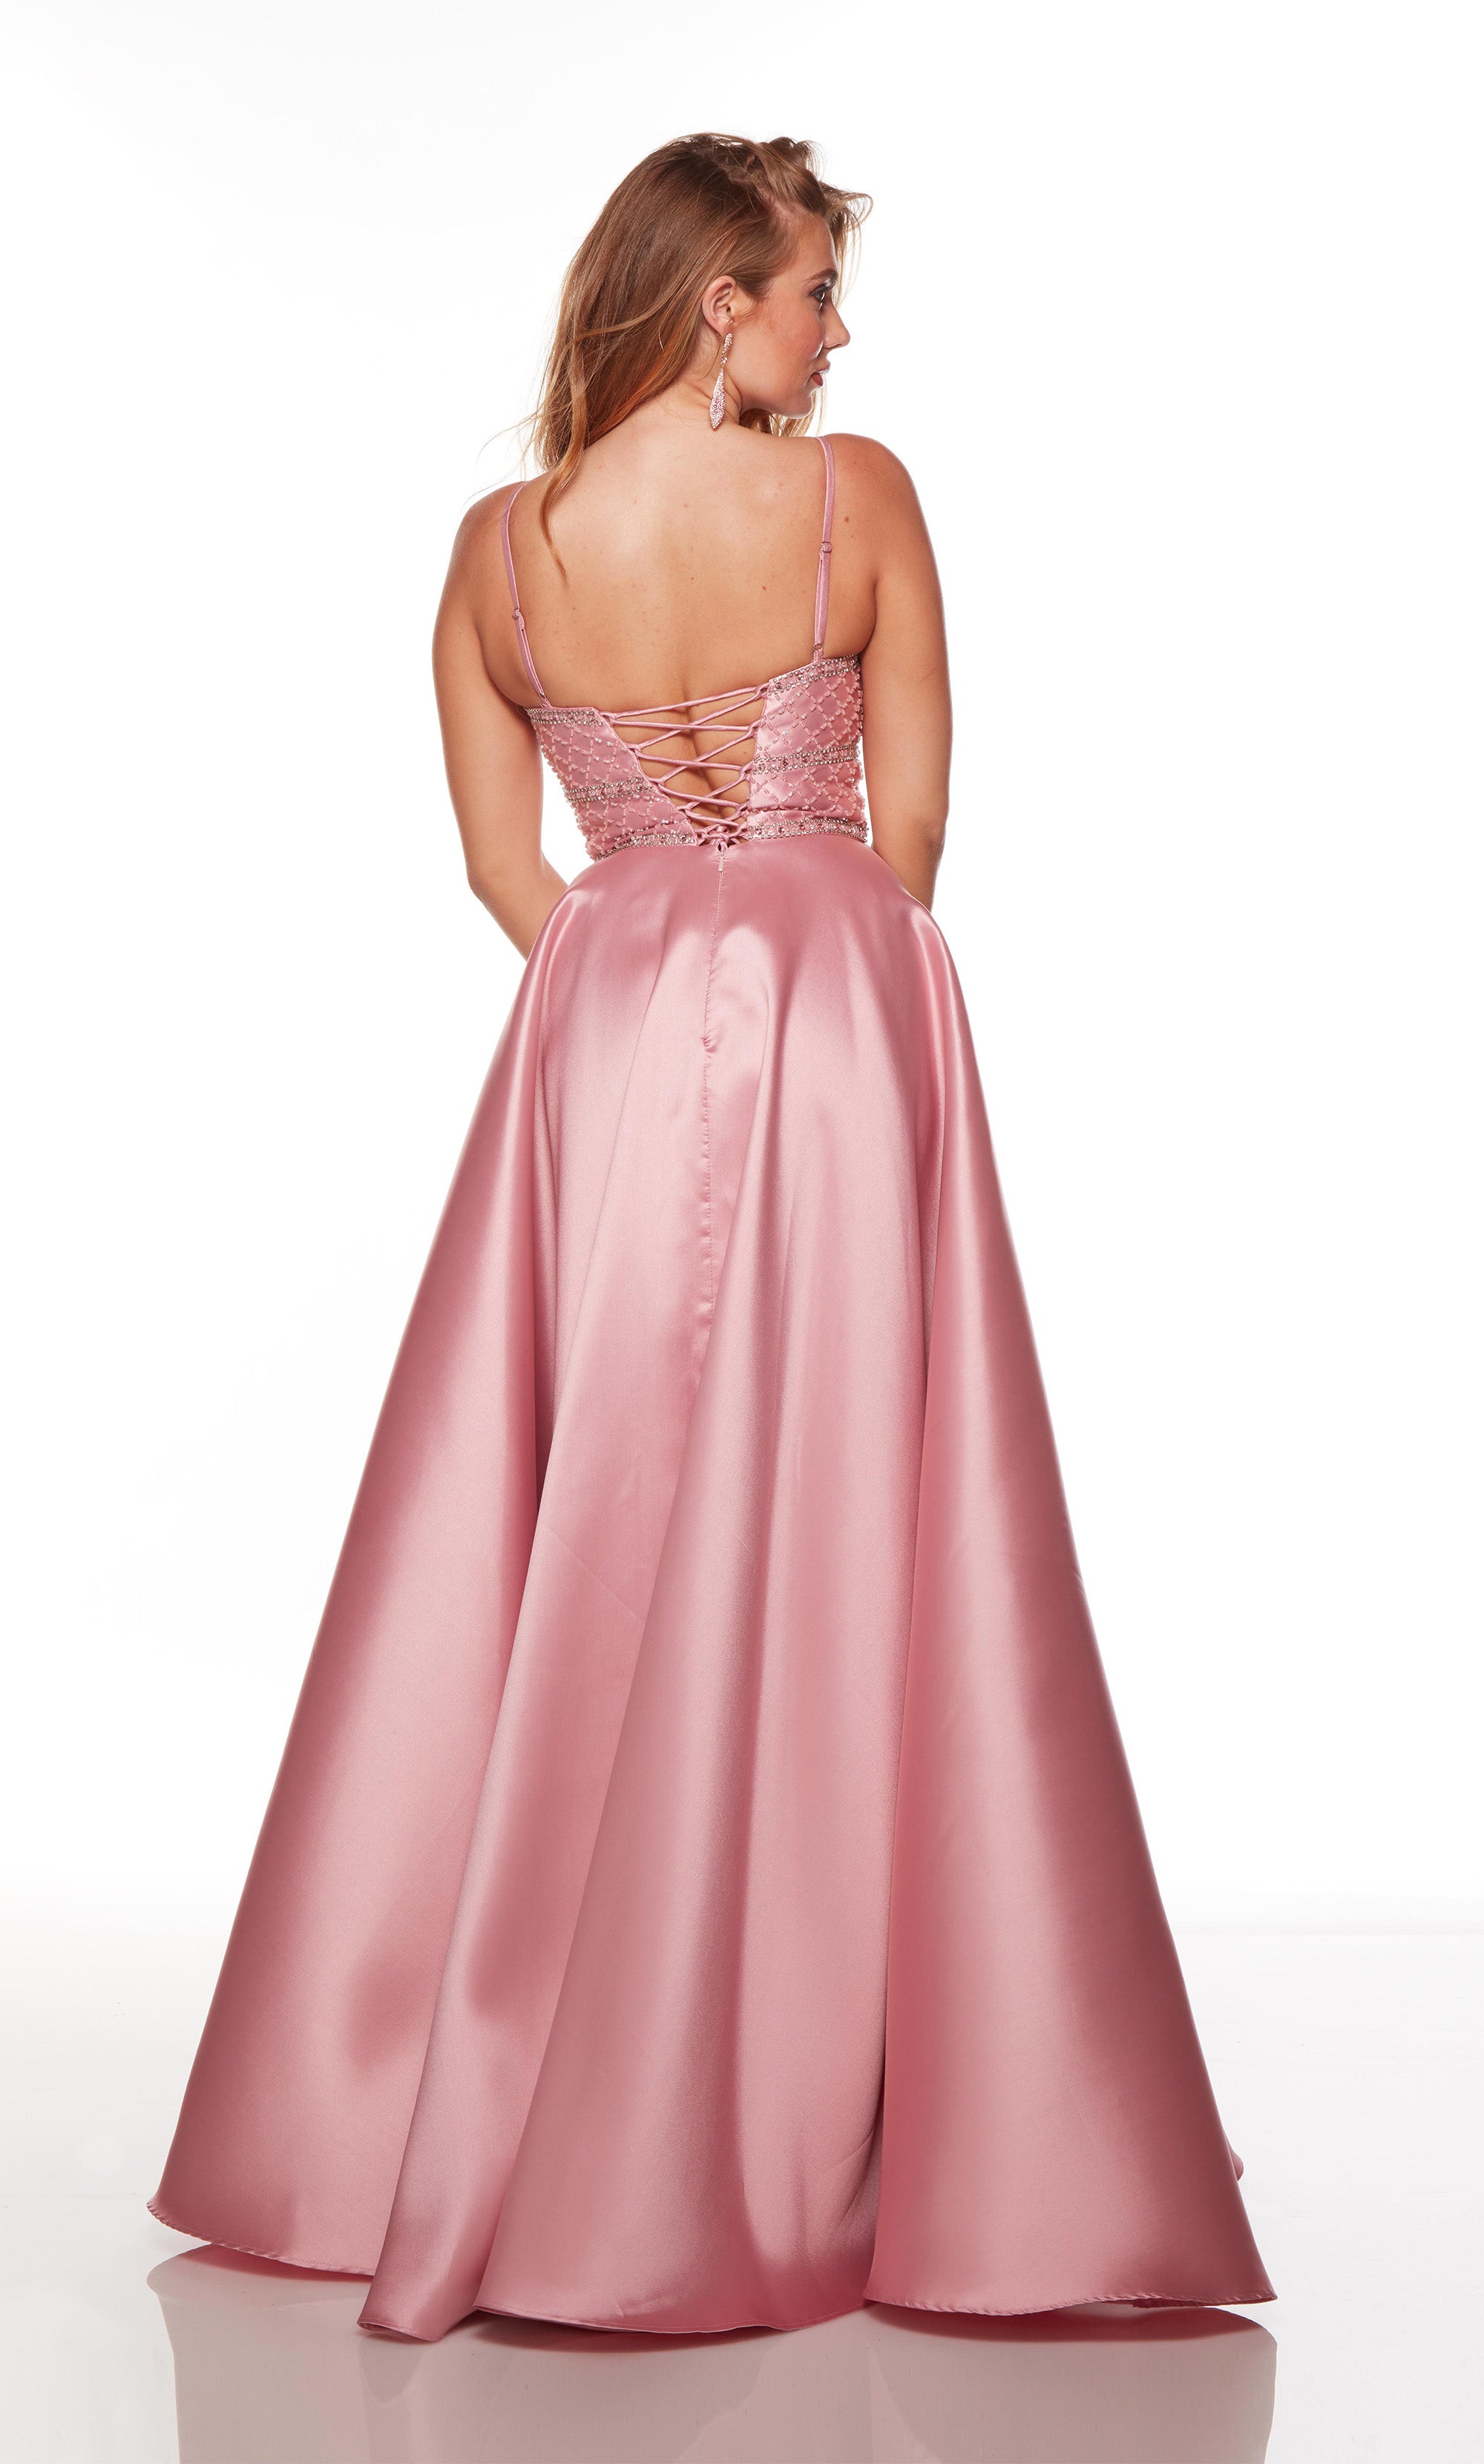 MauriBella - Pink Blush - Corset Ball Gown